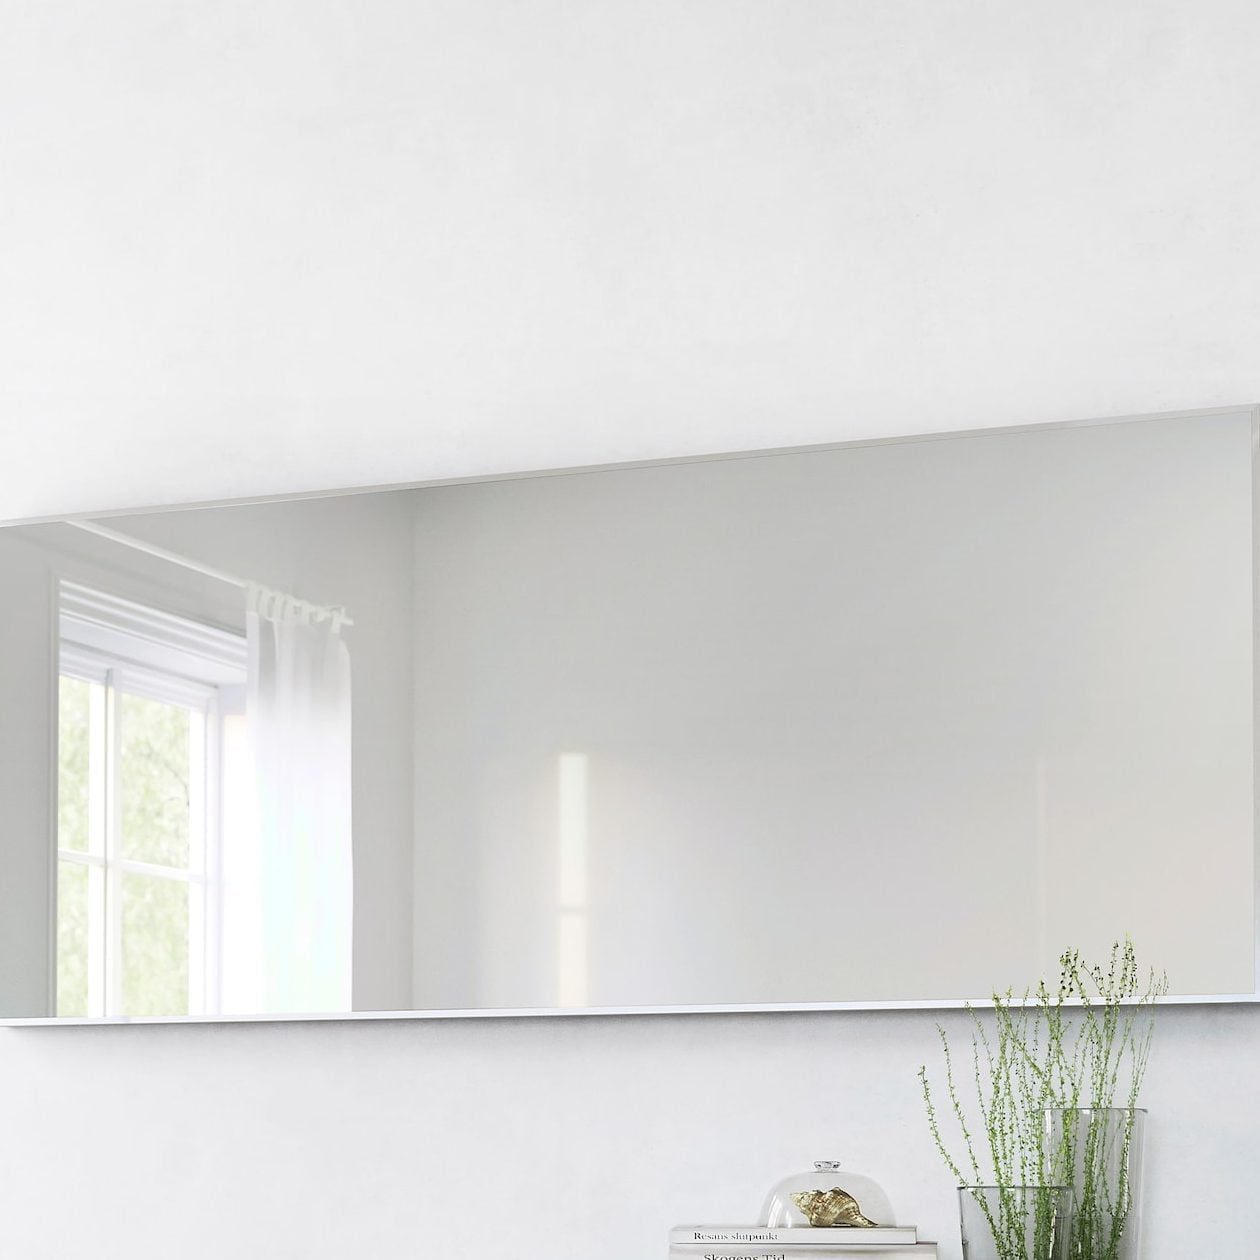 Wavy mirror: Irregularly-shaped reflective household product.